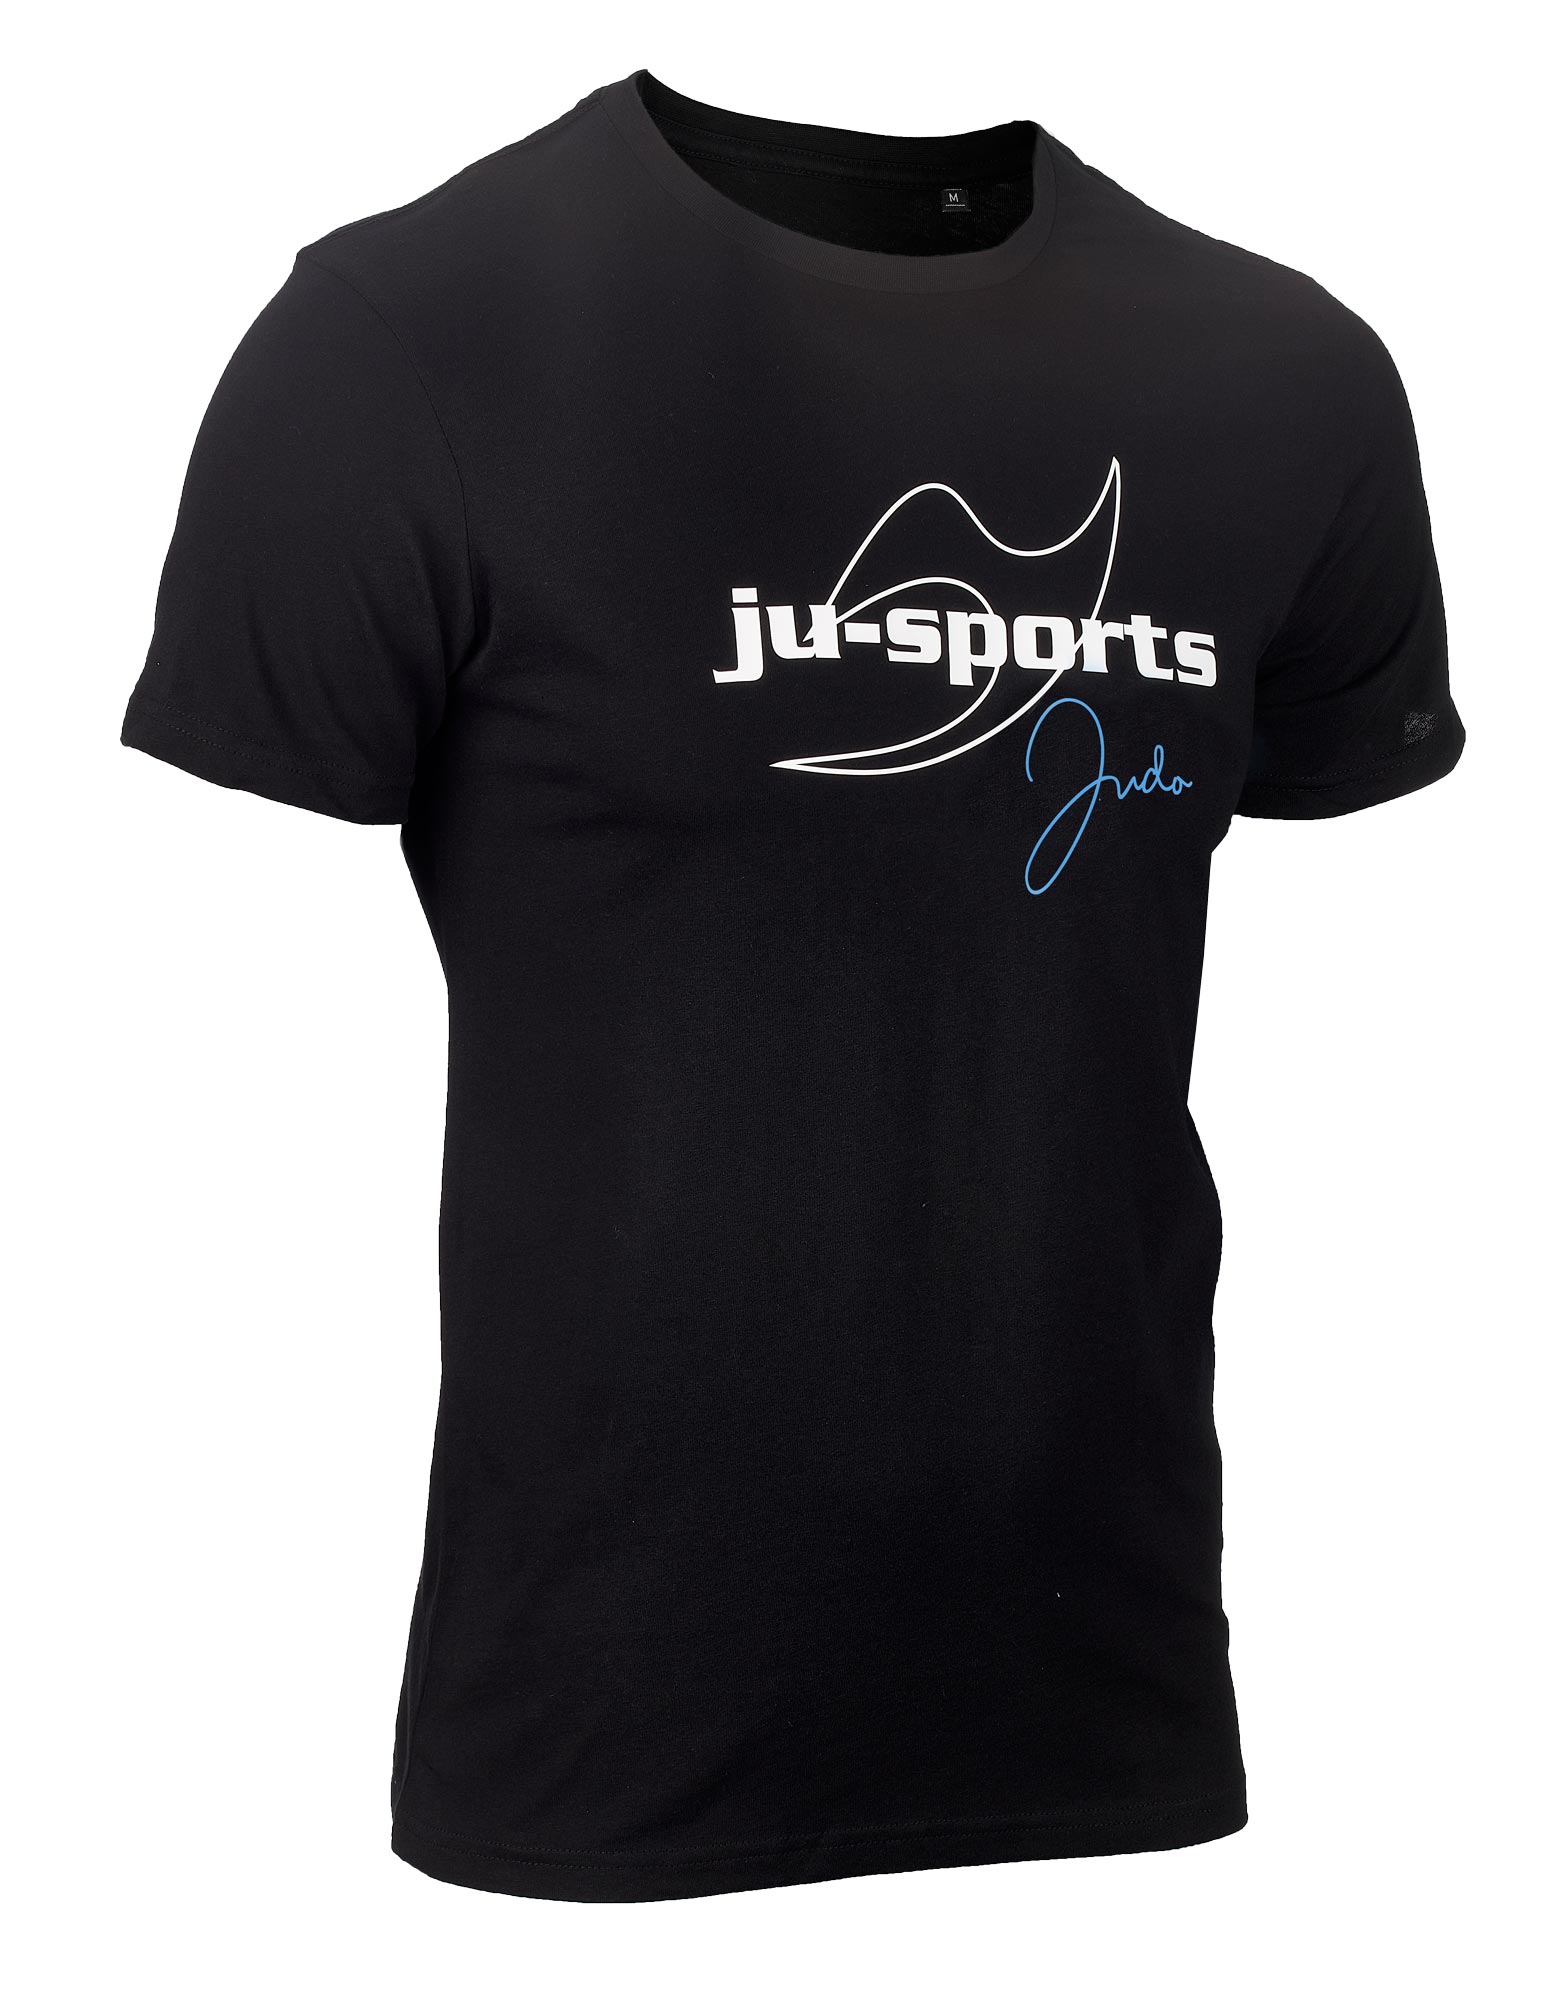 Ju-Sports Signature Line "Judo" T-Shirt